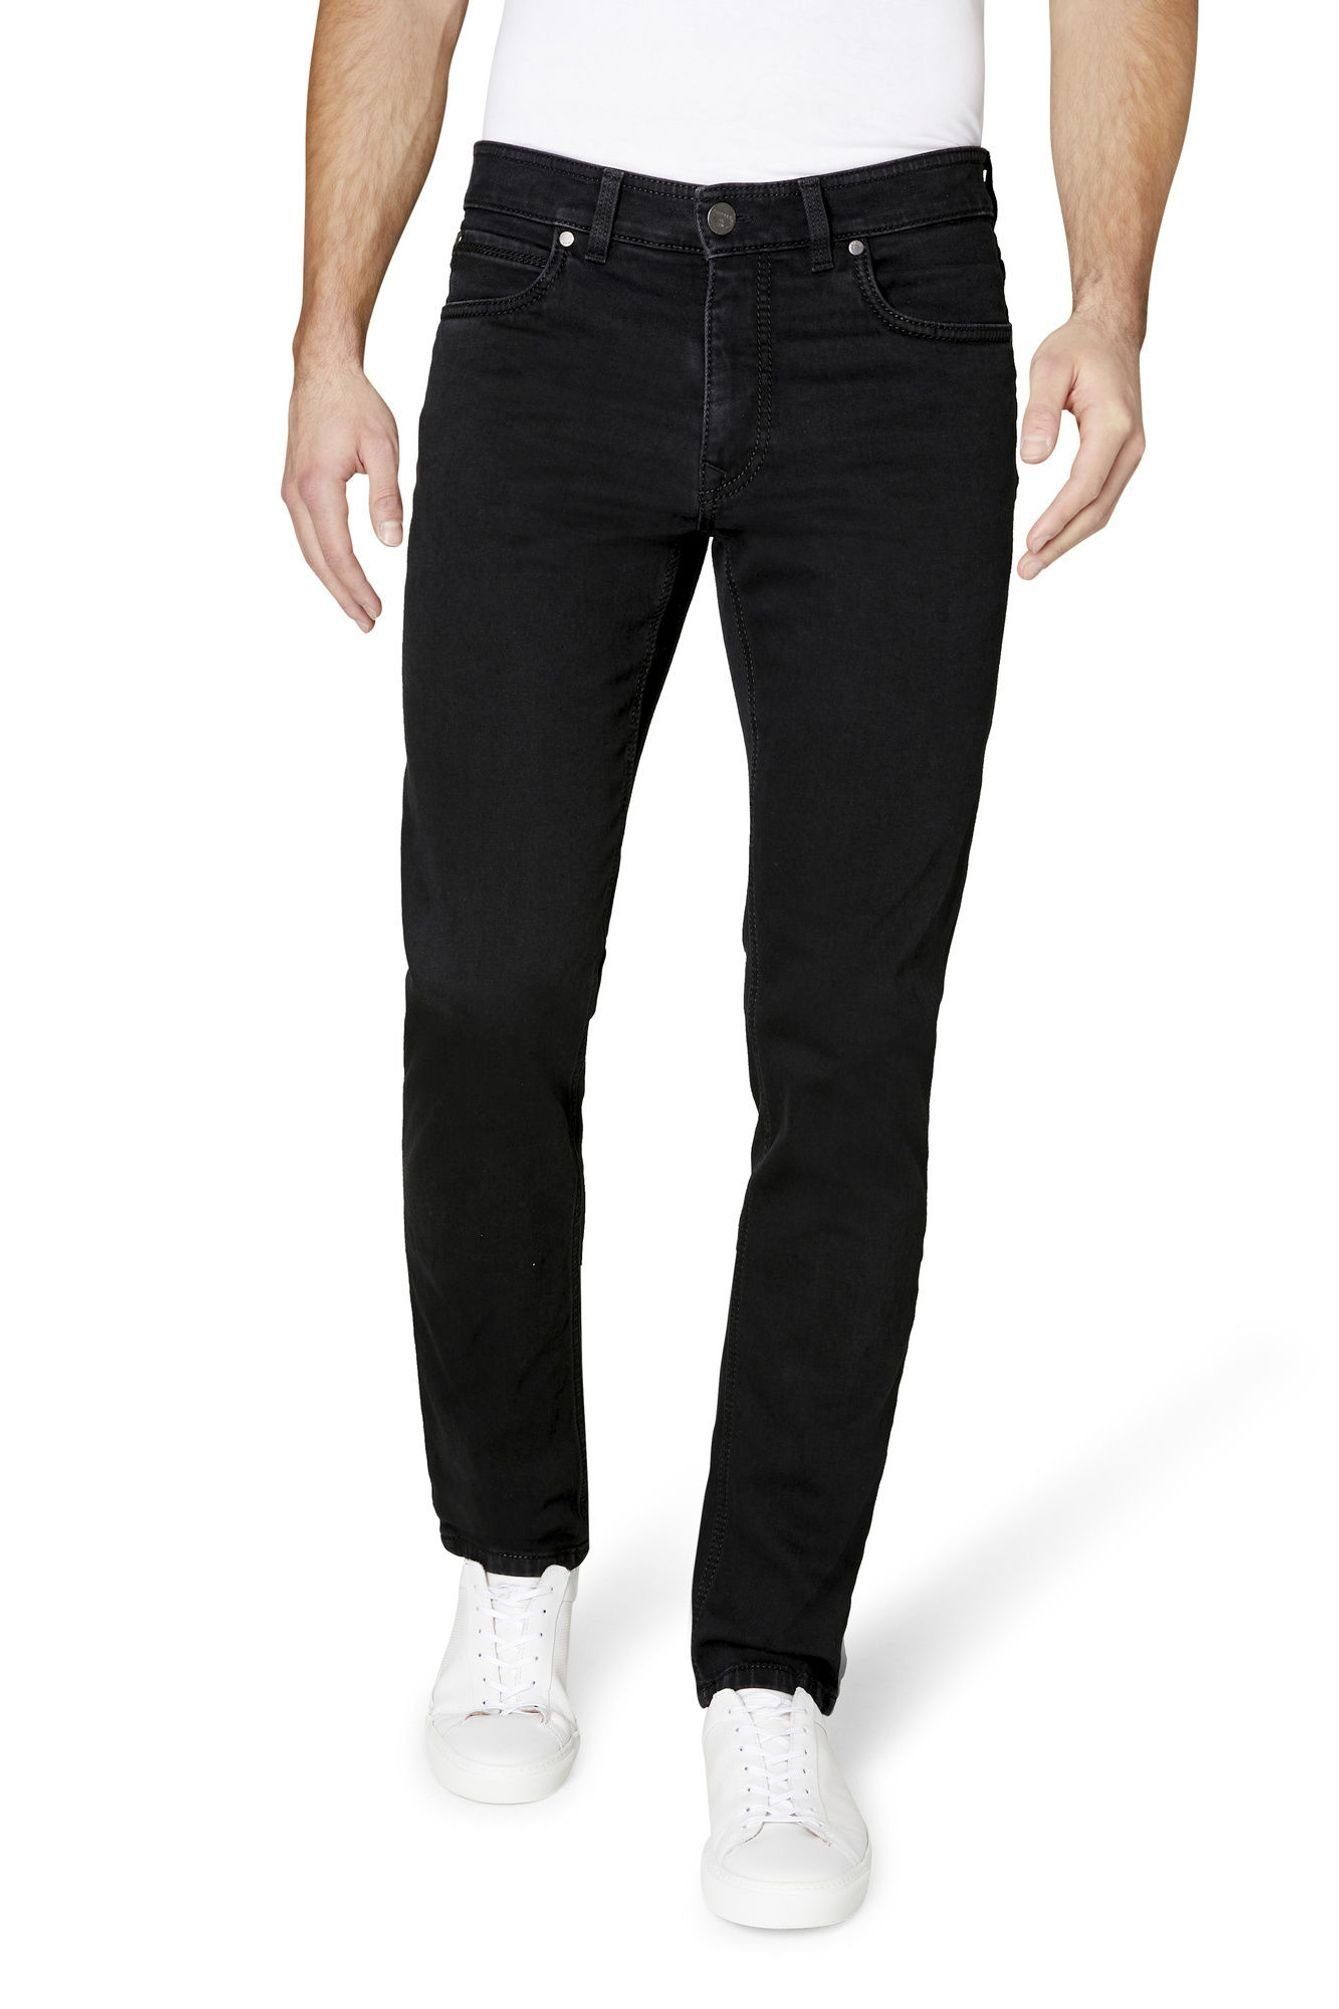 Atelier GARDEUR 5-Pocket-Jeans Batu-2 Superflex Denim faded black